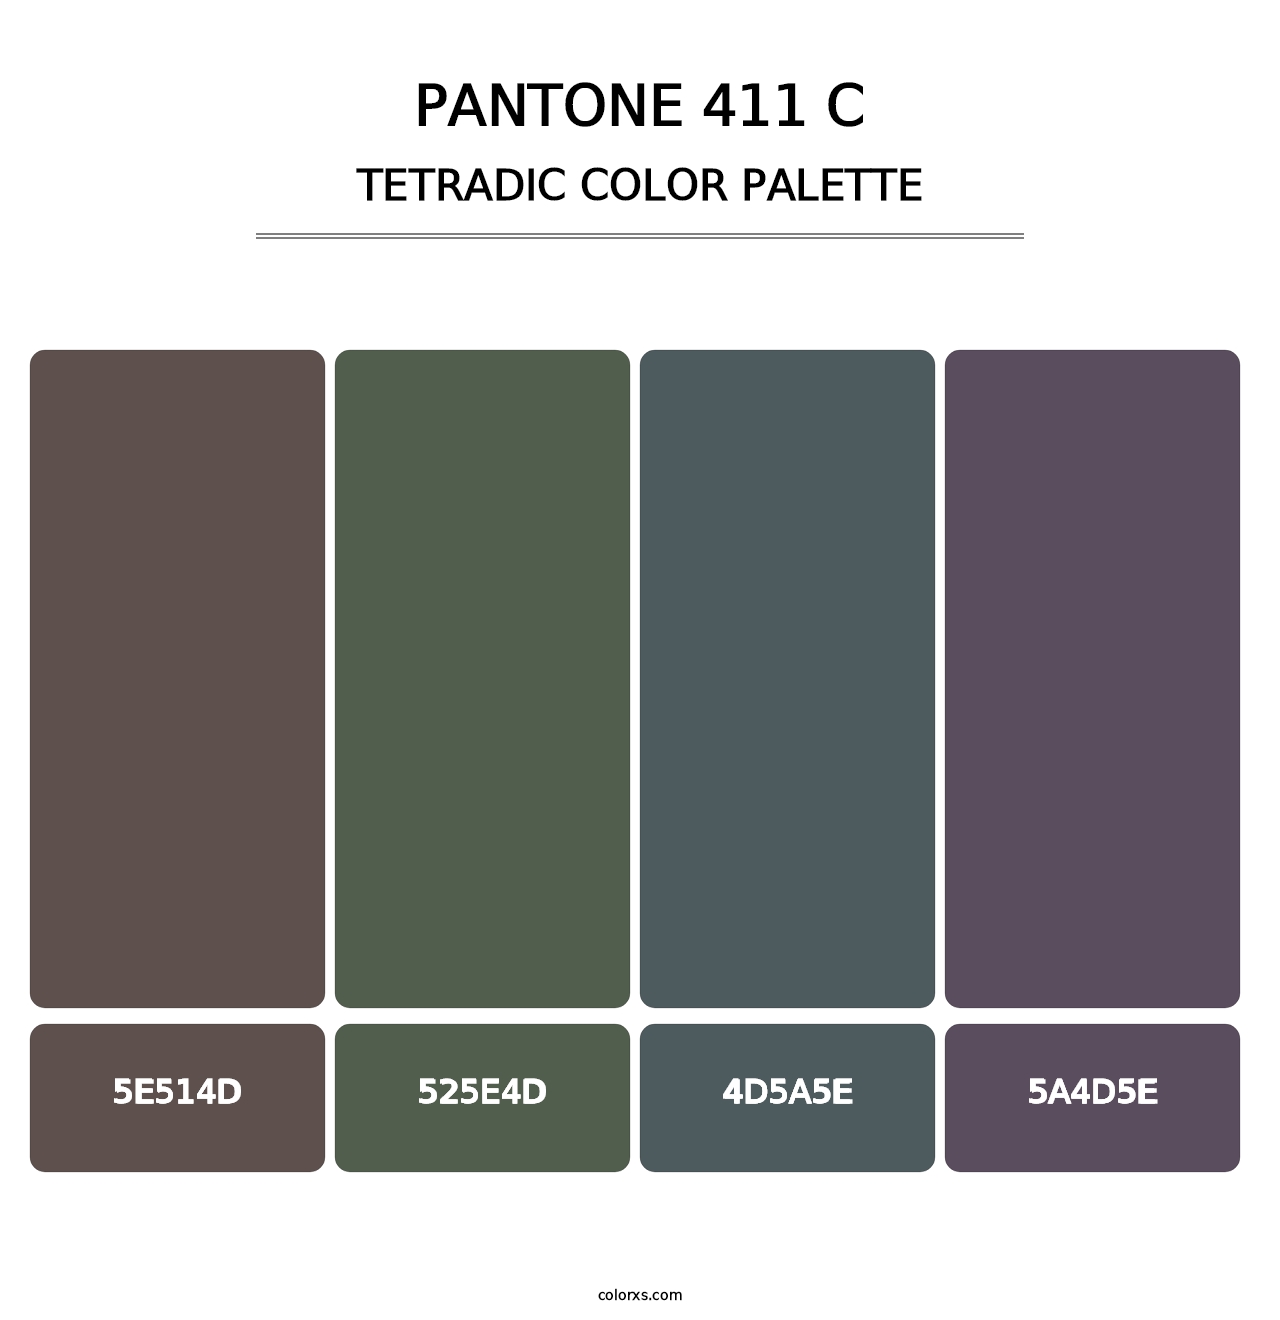 PANTONE 411 C - Tetradic Color Palette